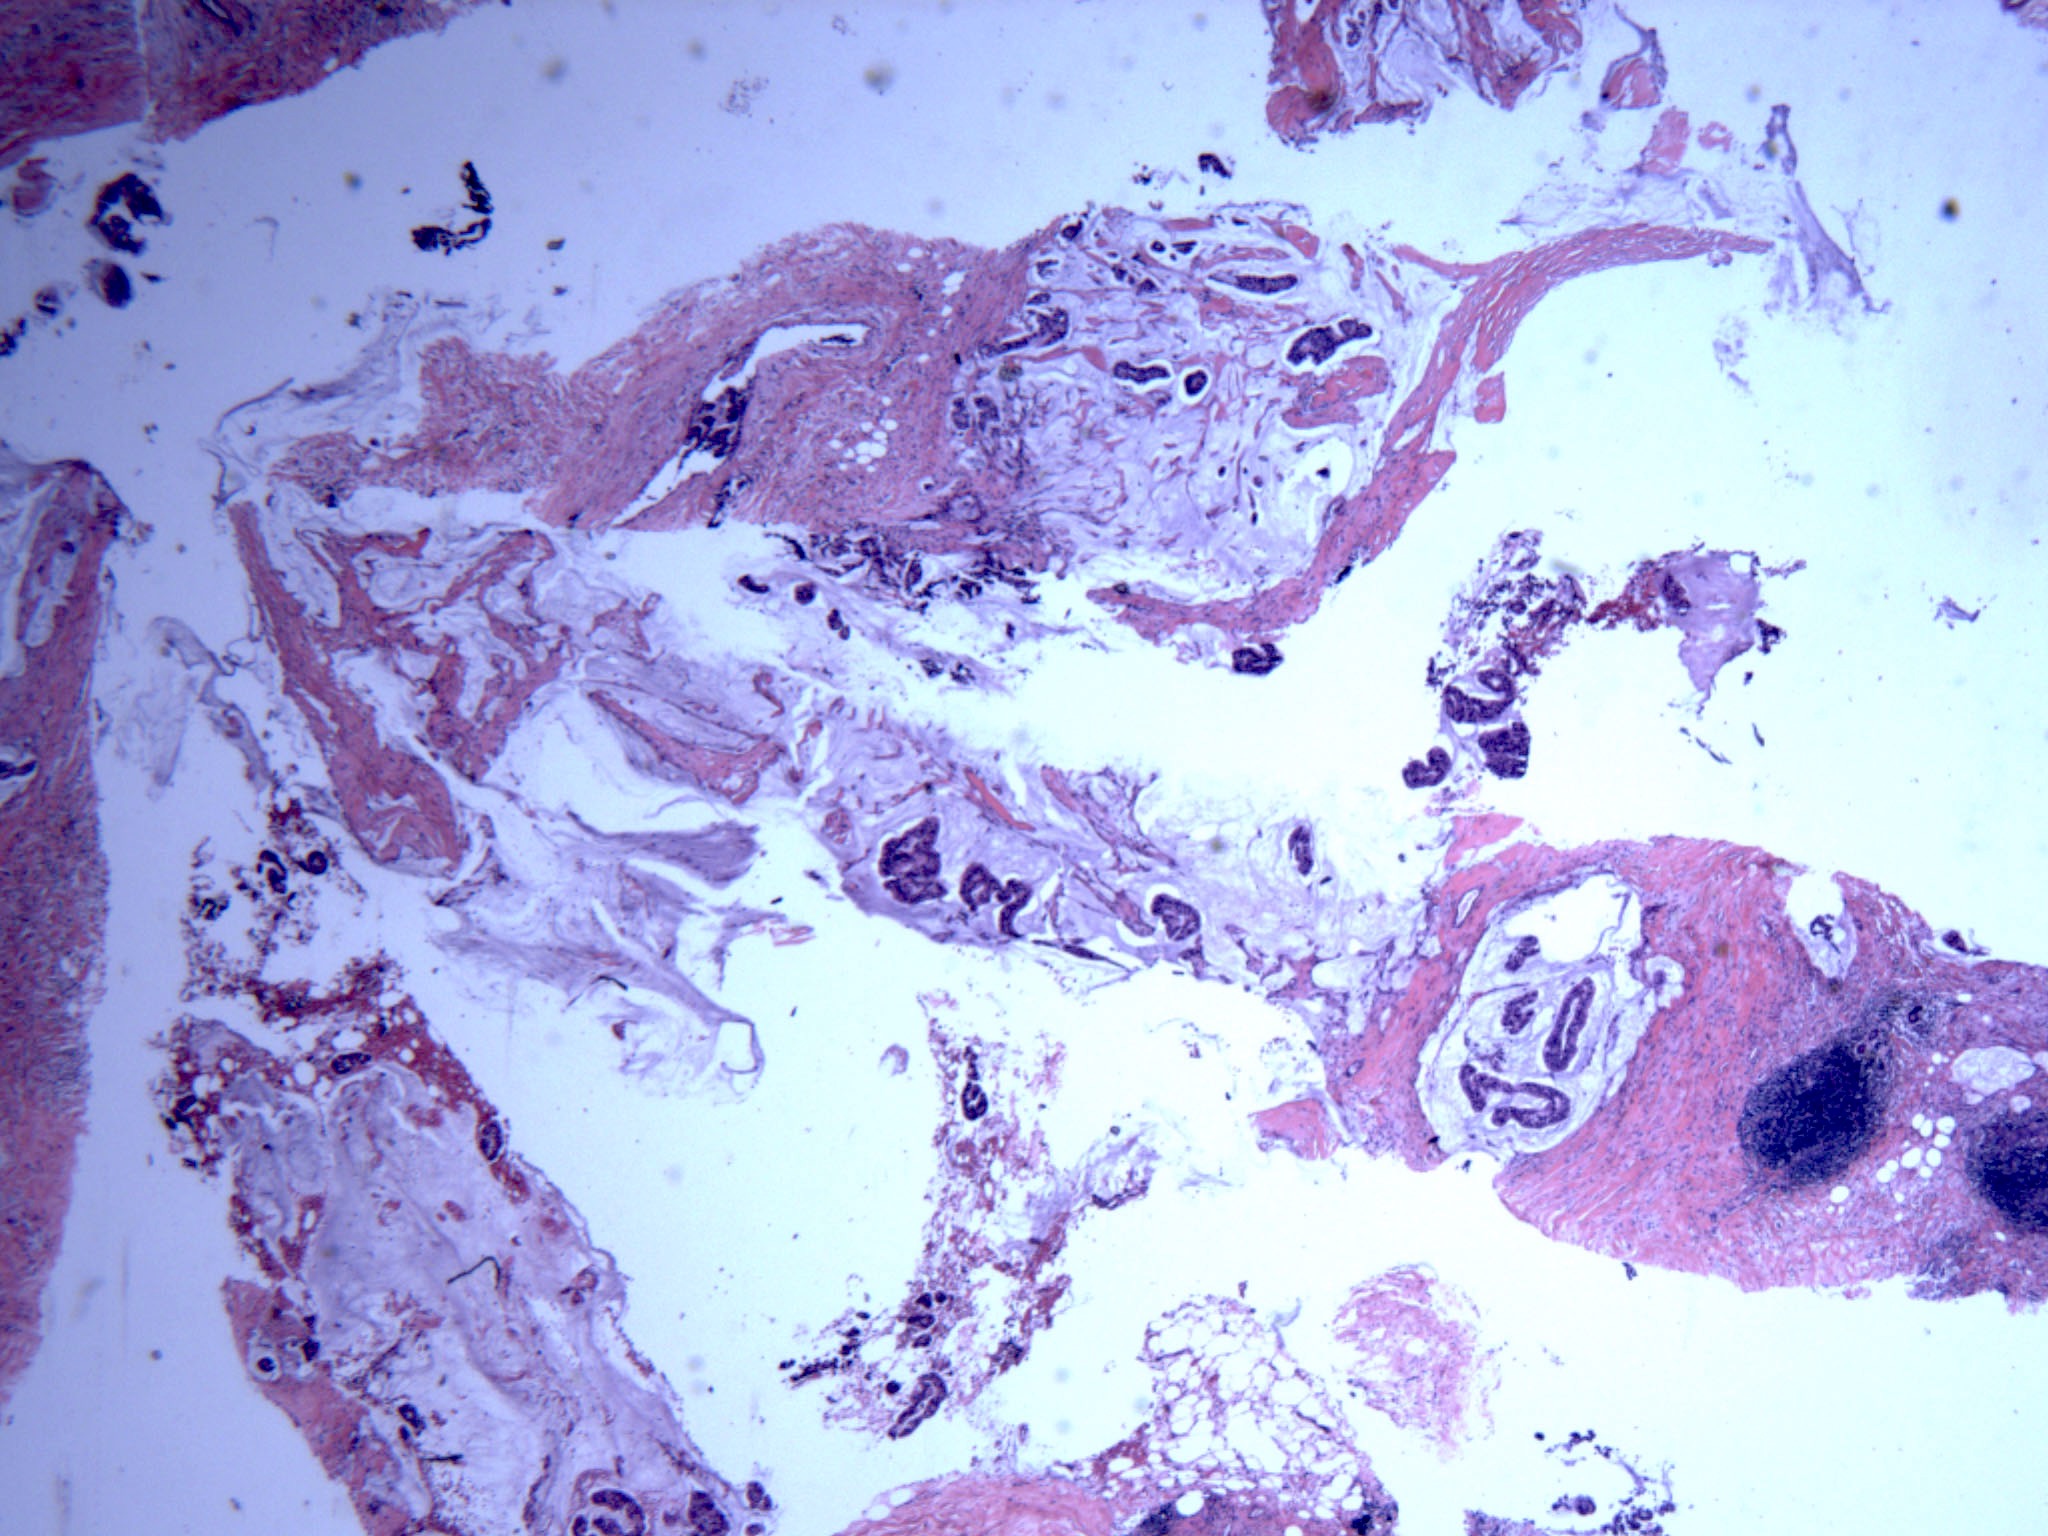 Mucinous micropapillary carcinoma